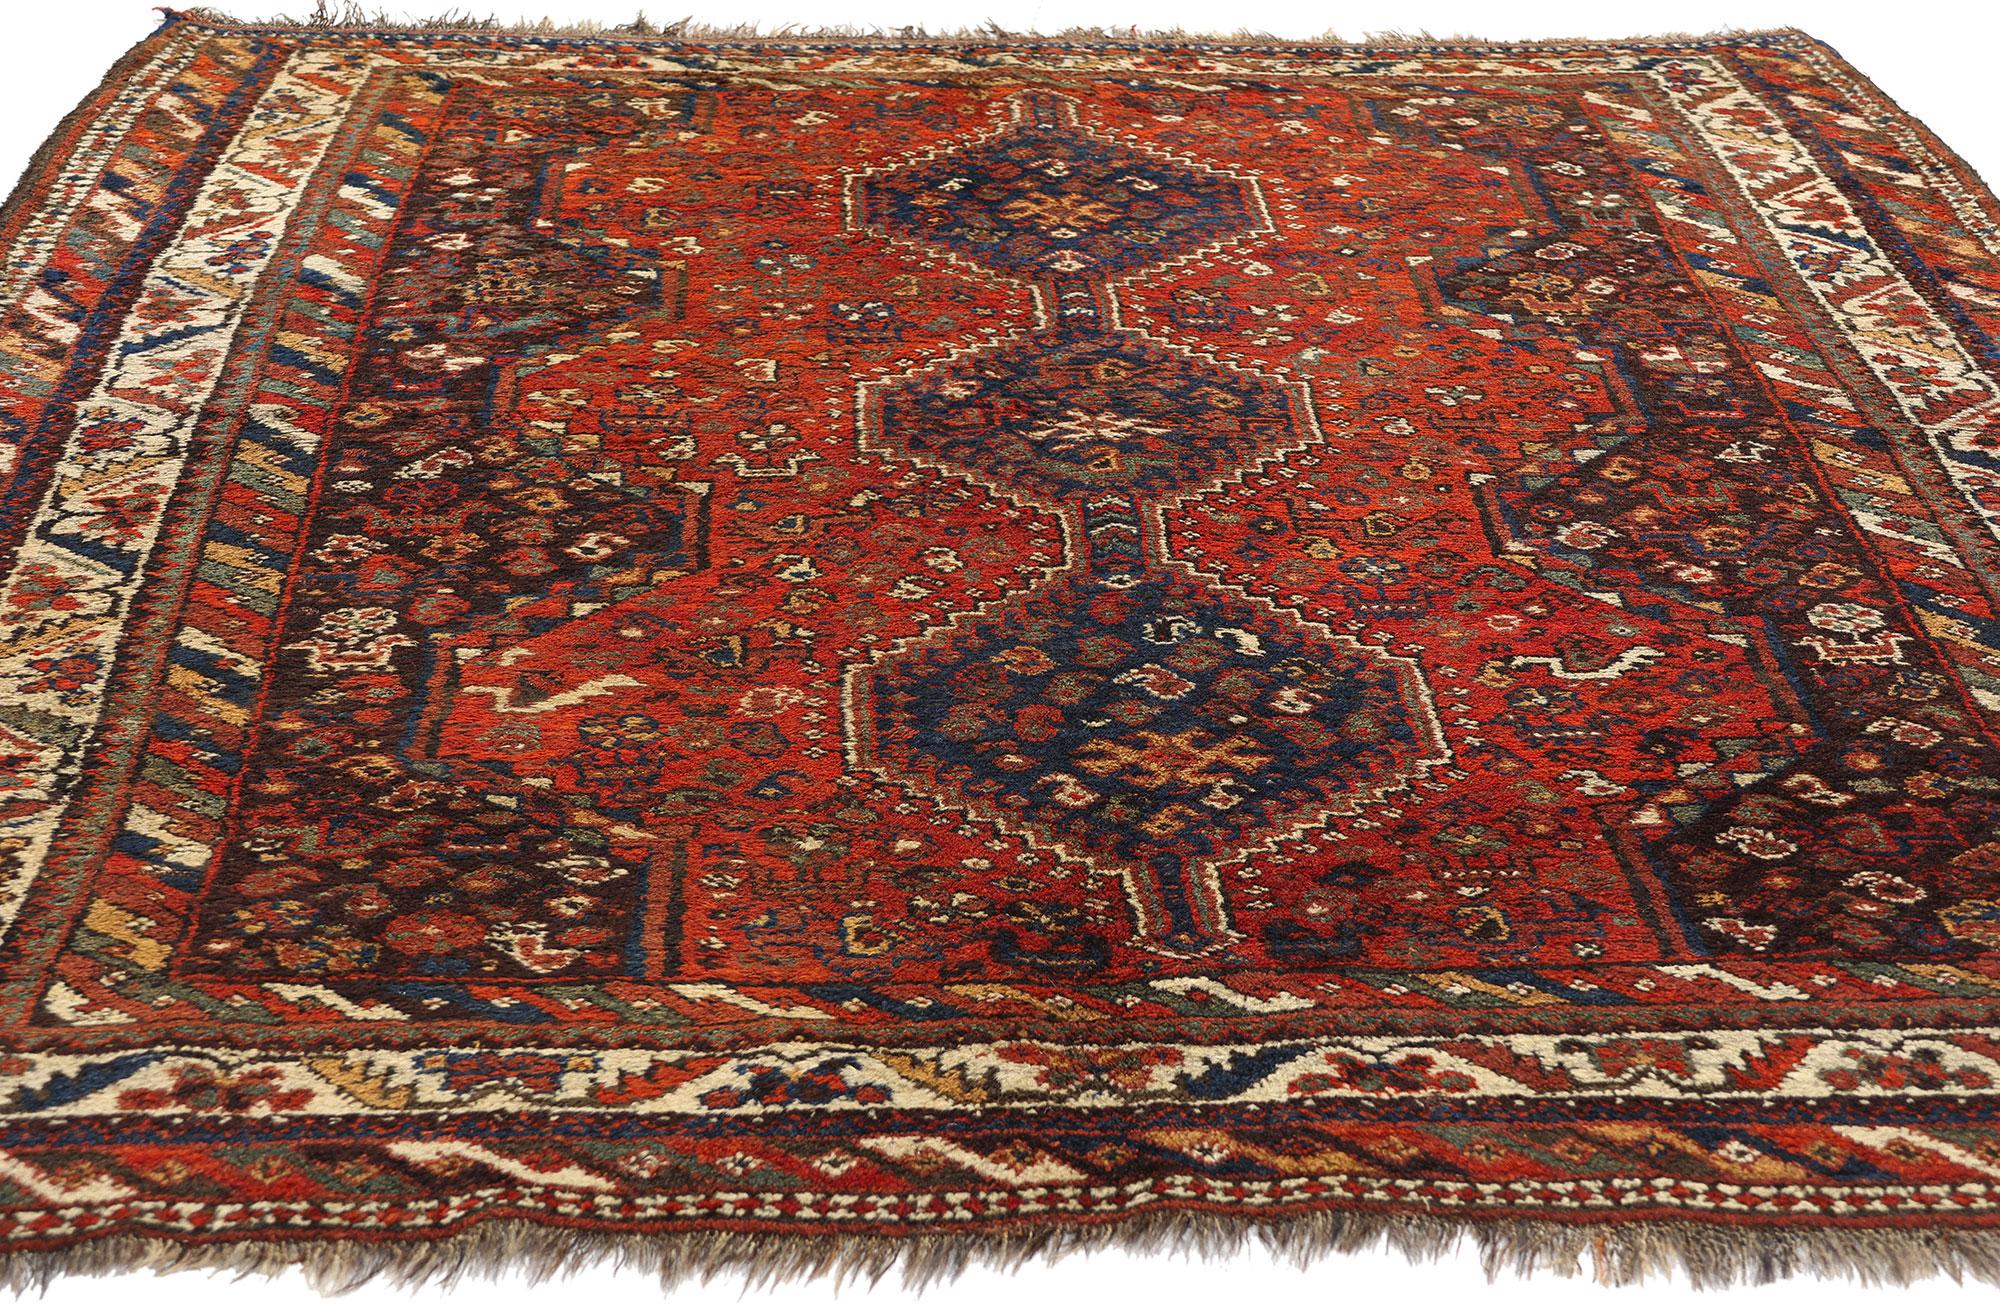 Tribal Late 19th Century Antique Persian Shiraz Carpet For Sale